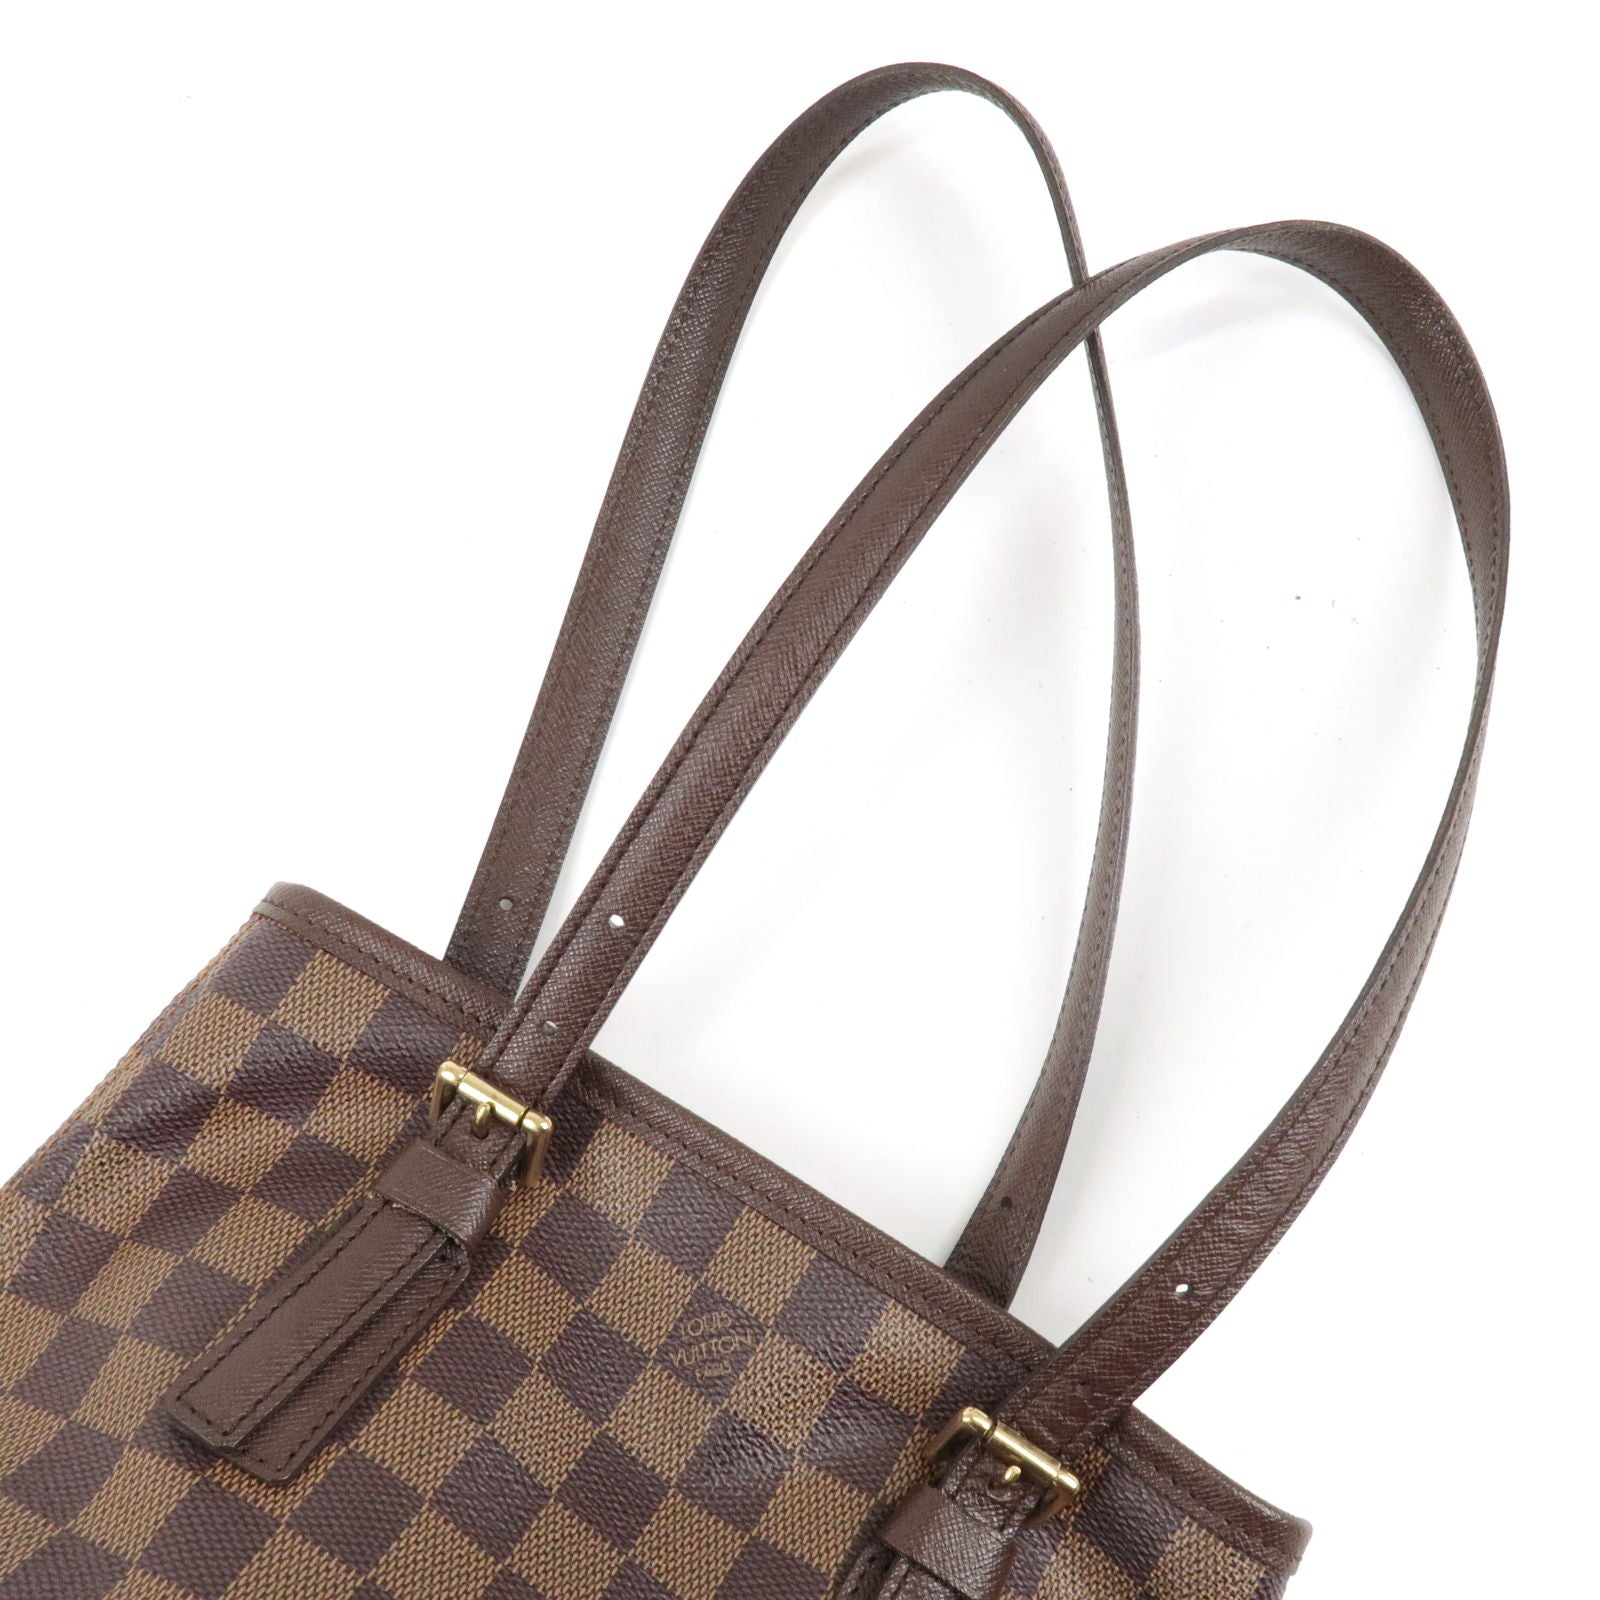 Louis Vuitton Marais Tote Bags for Women